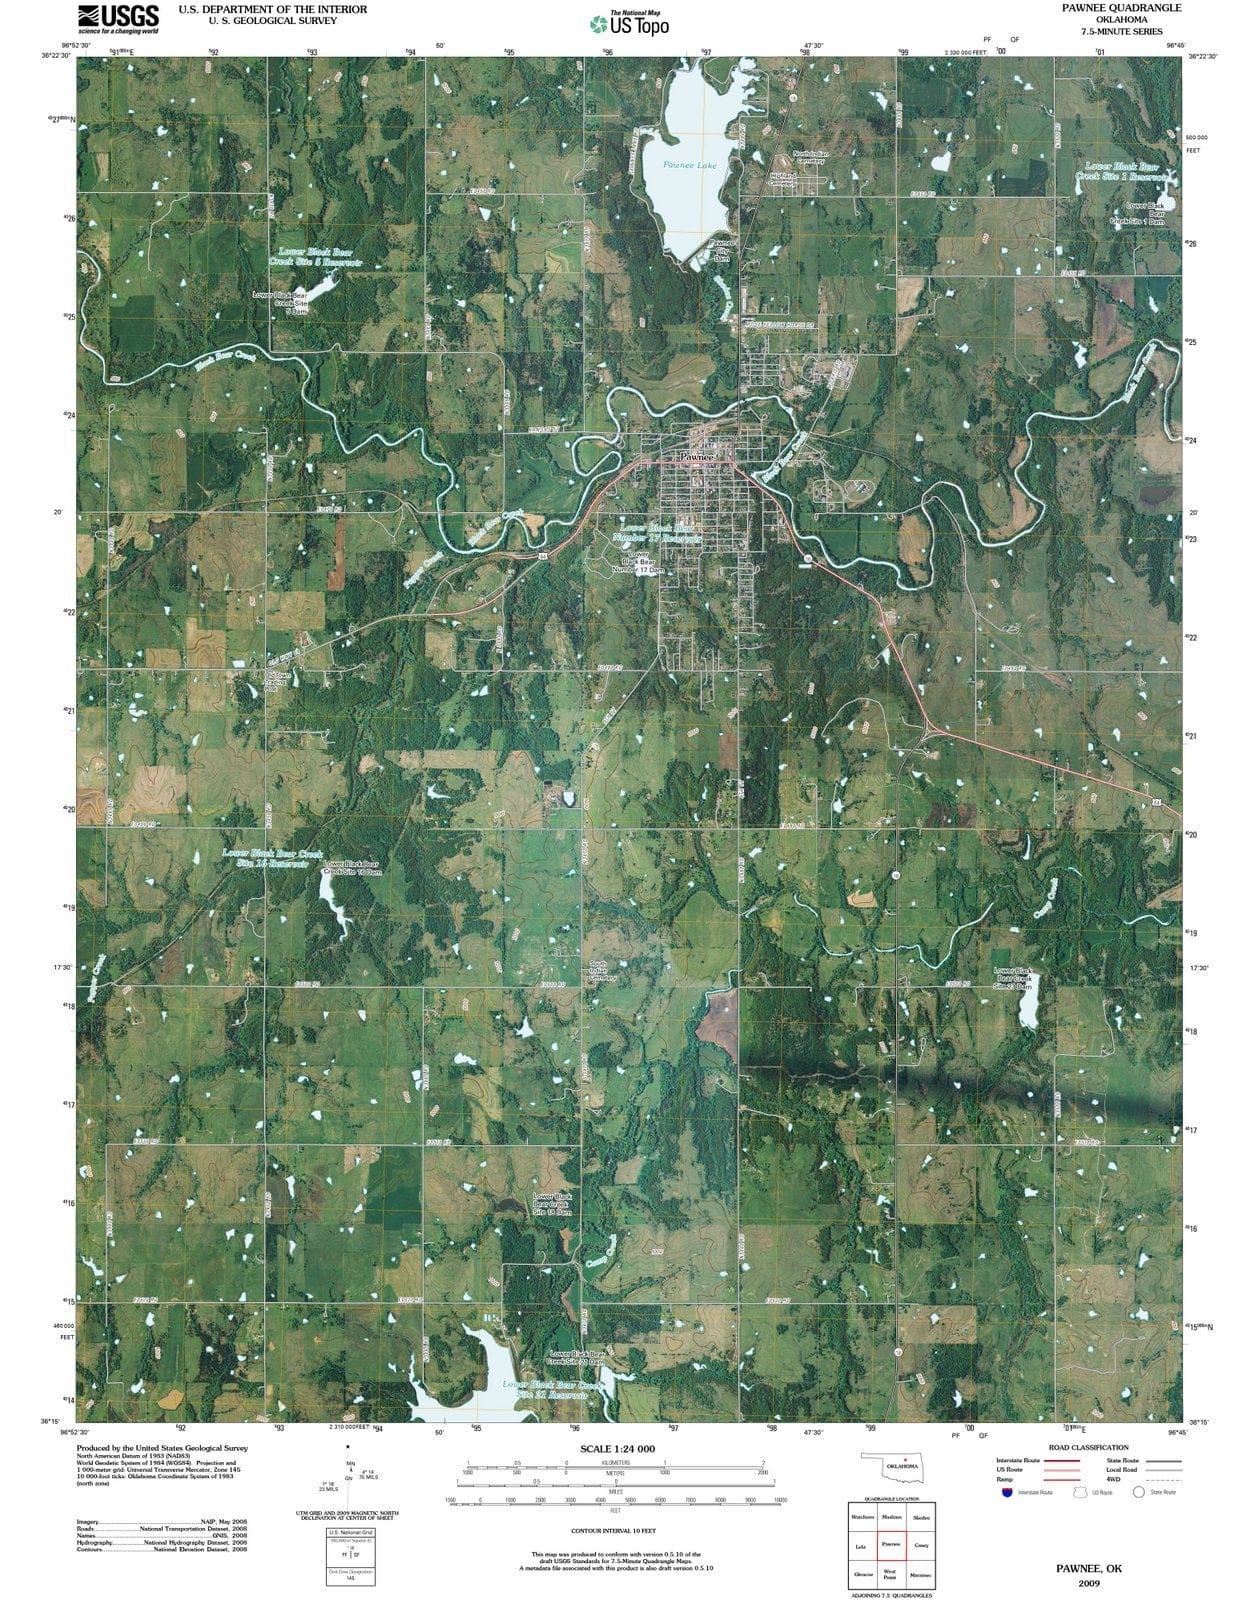 2009 Pawnee, OK - Oklahoma - USGS Topographic Map